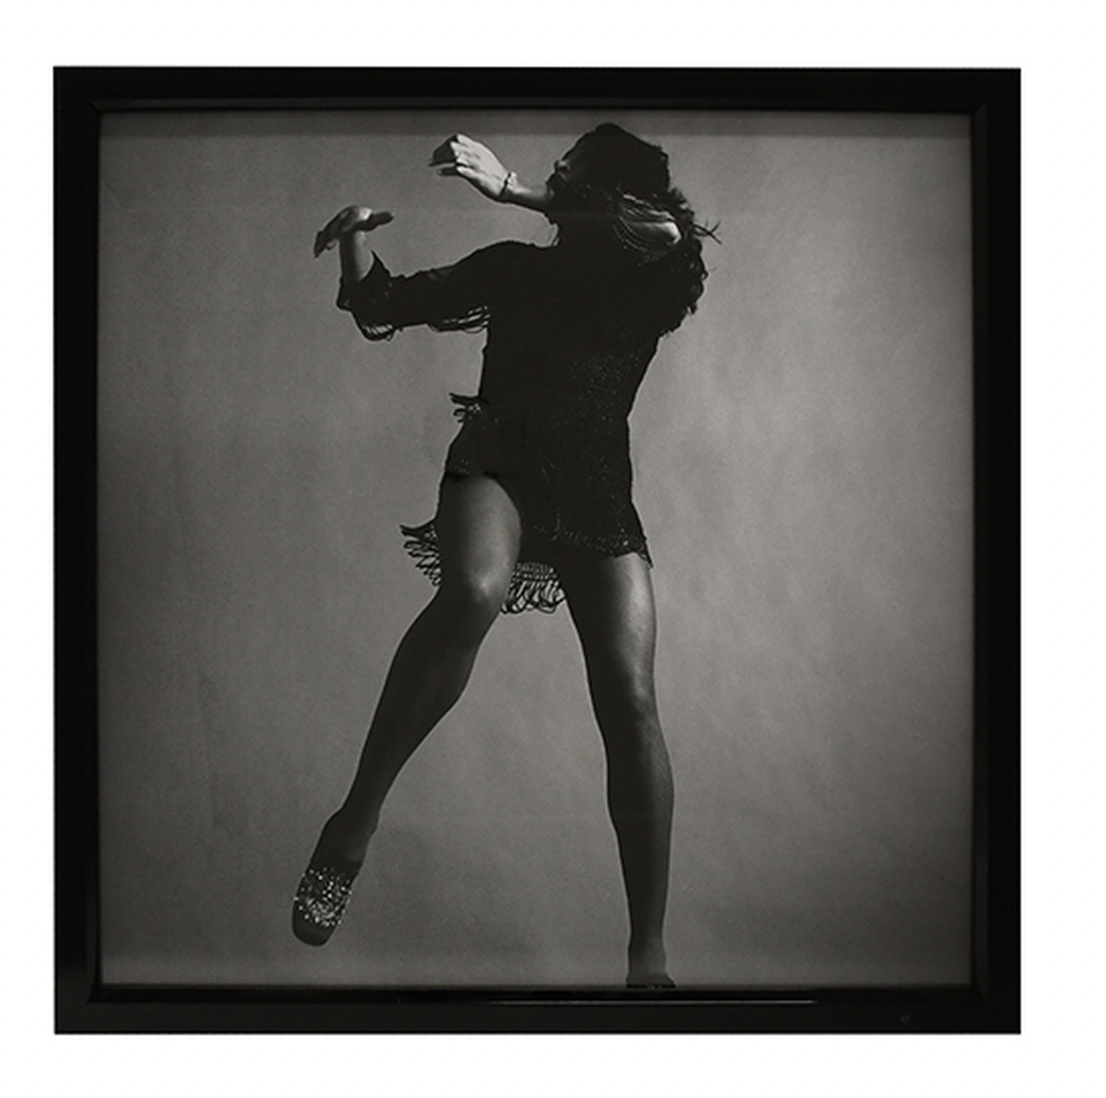 Worlds Away Square Black & White Wall Art – Tina Turner 10